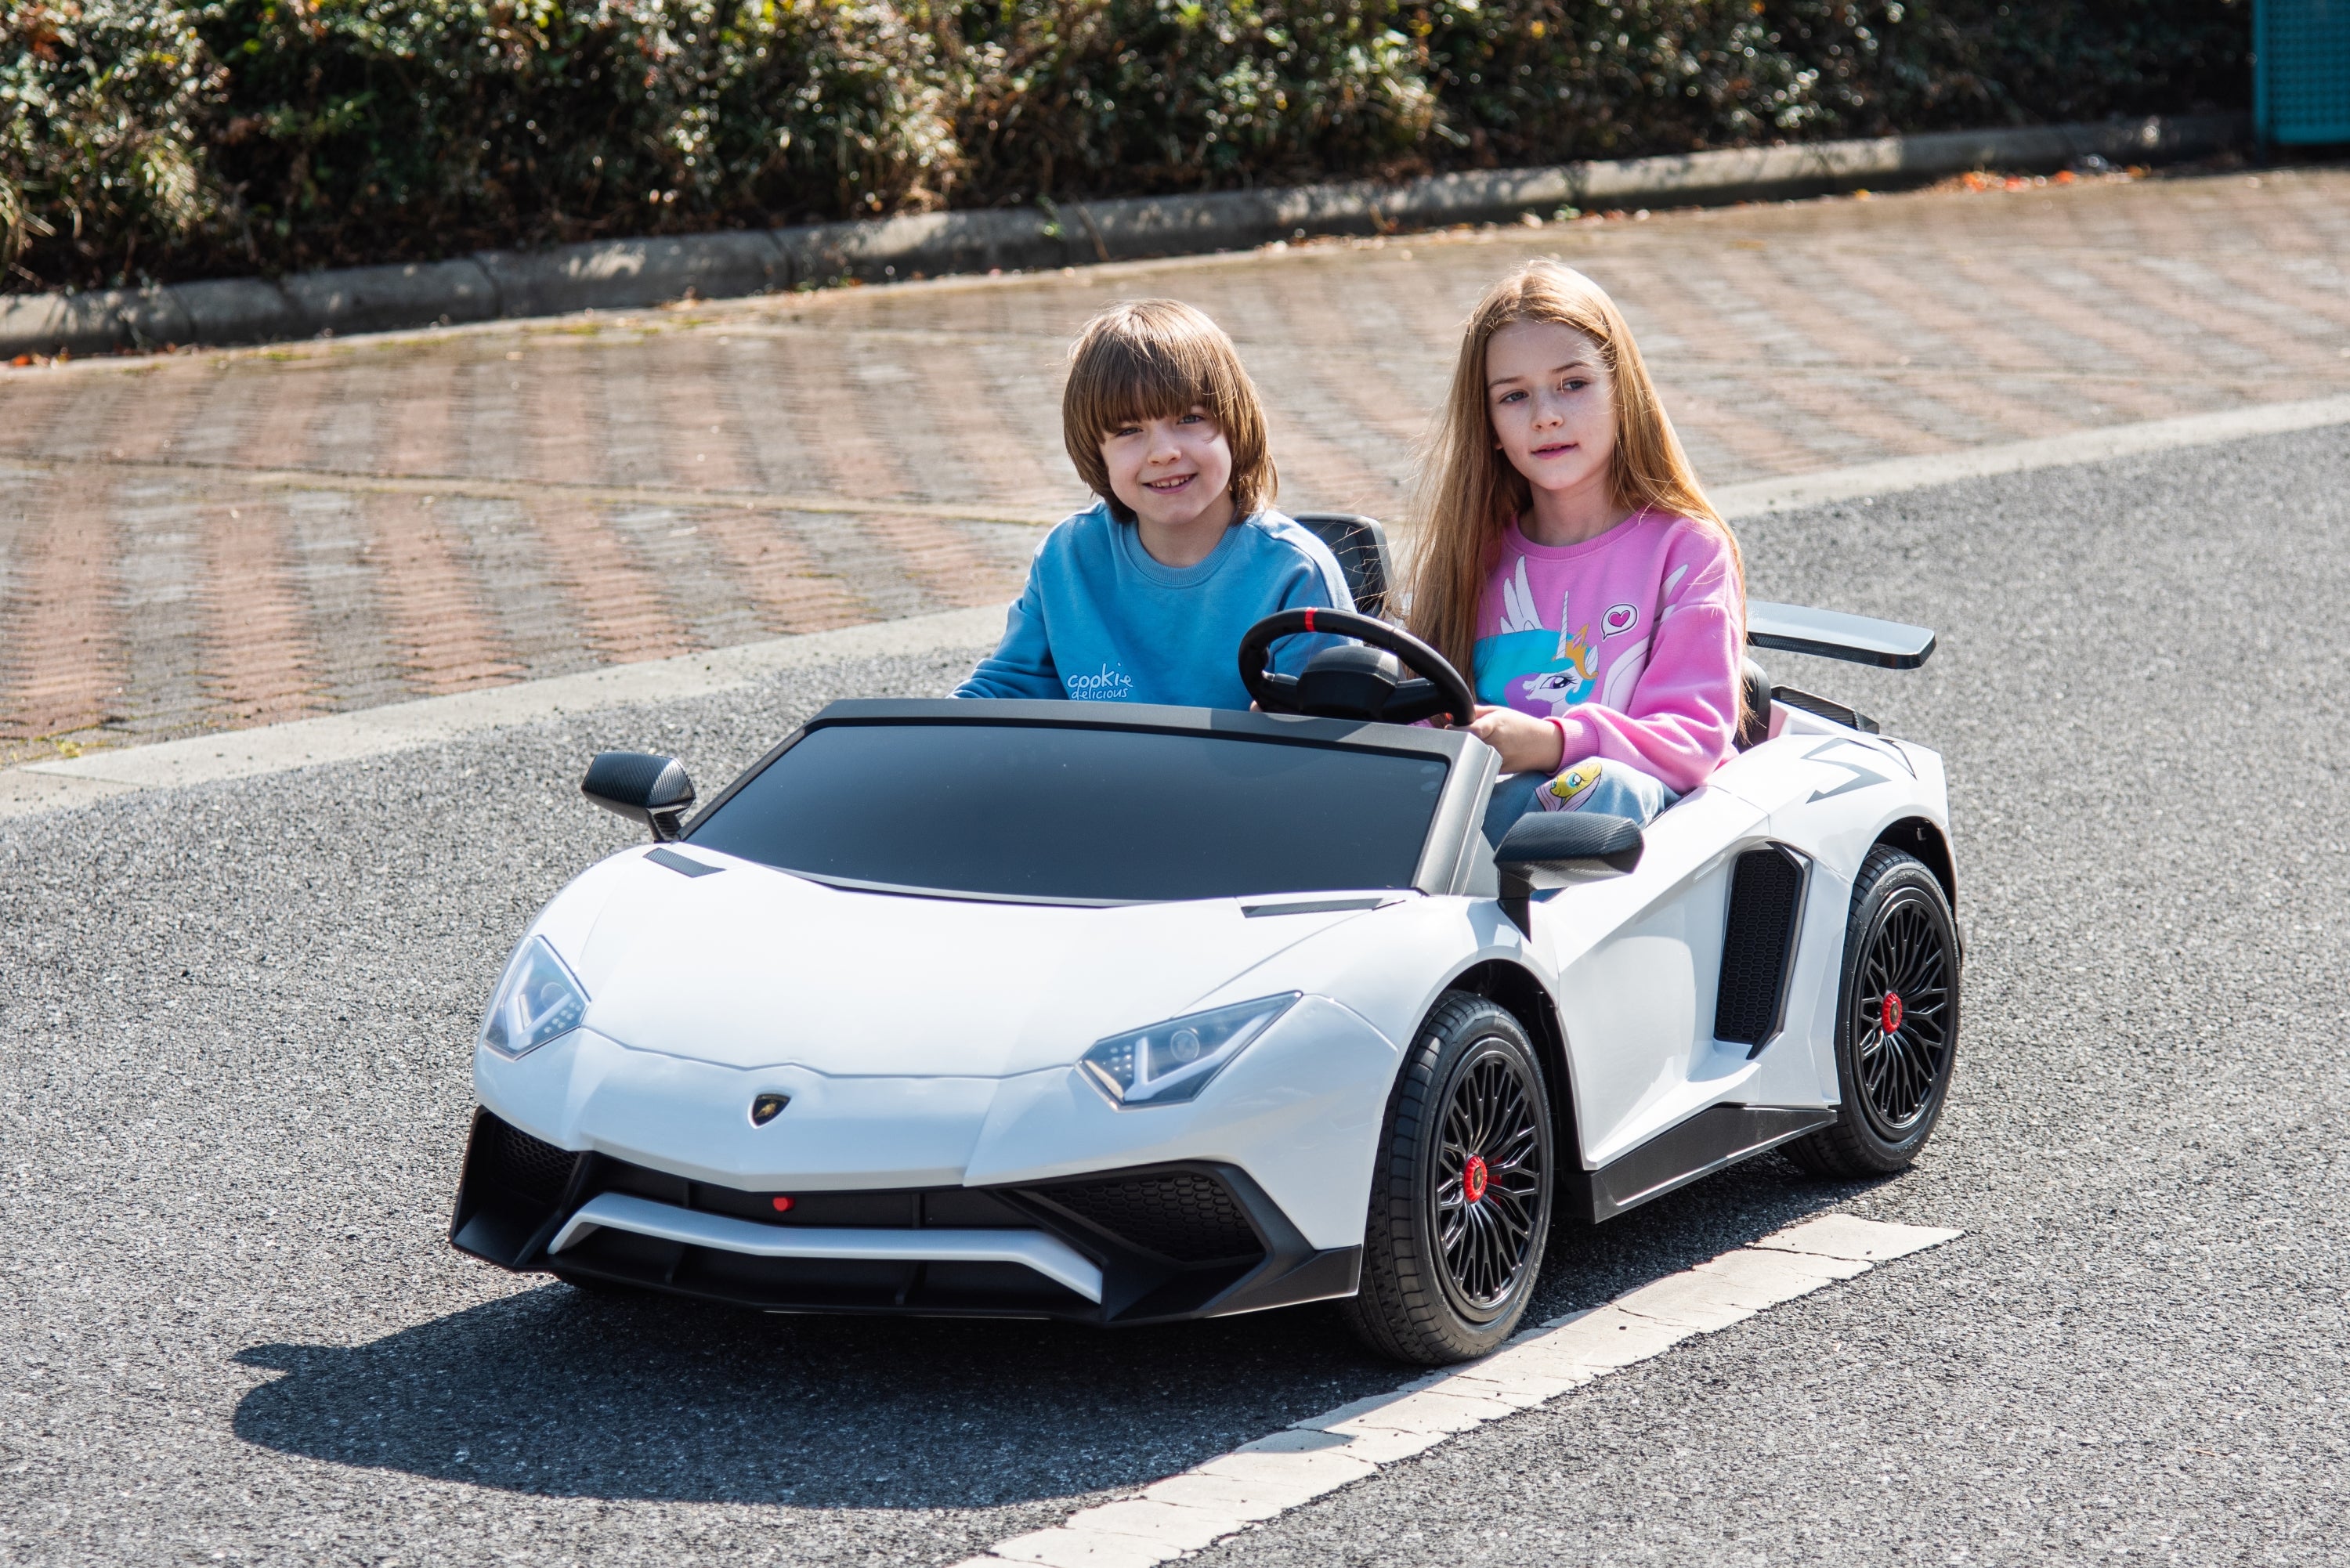 24V Lamborghini Aventador 2 Seater Ride On Car for Kids: Advanced Brushless Motor & Differential for High-Octane Fun